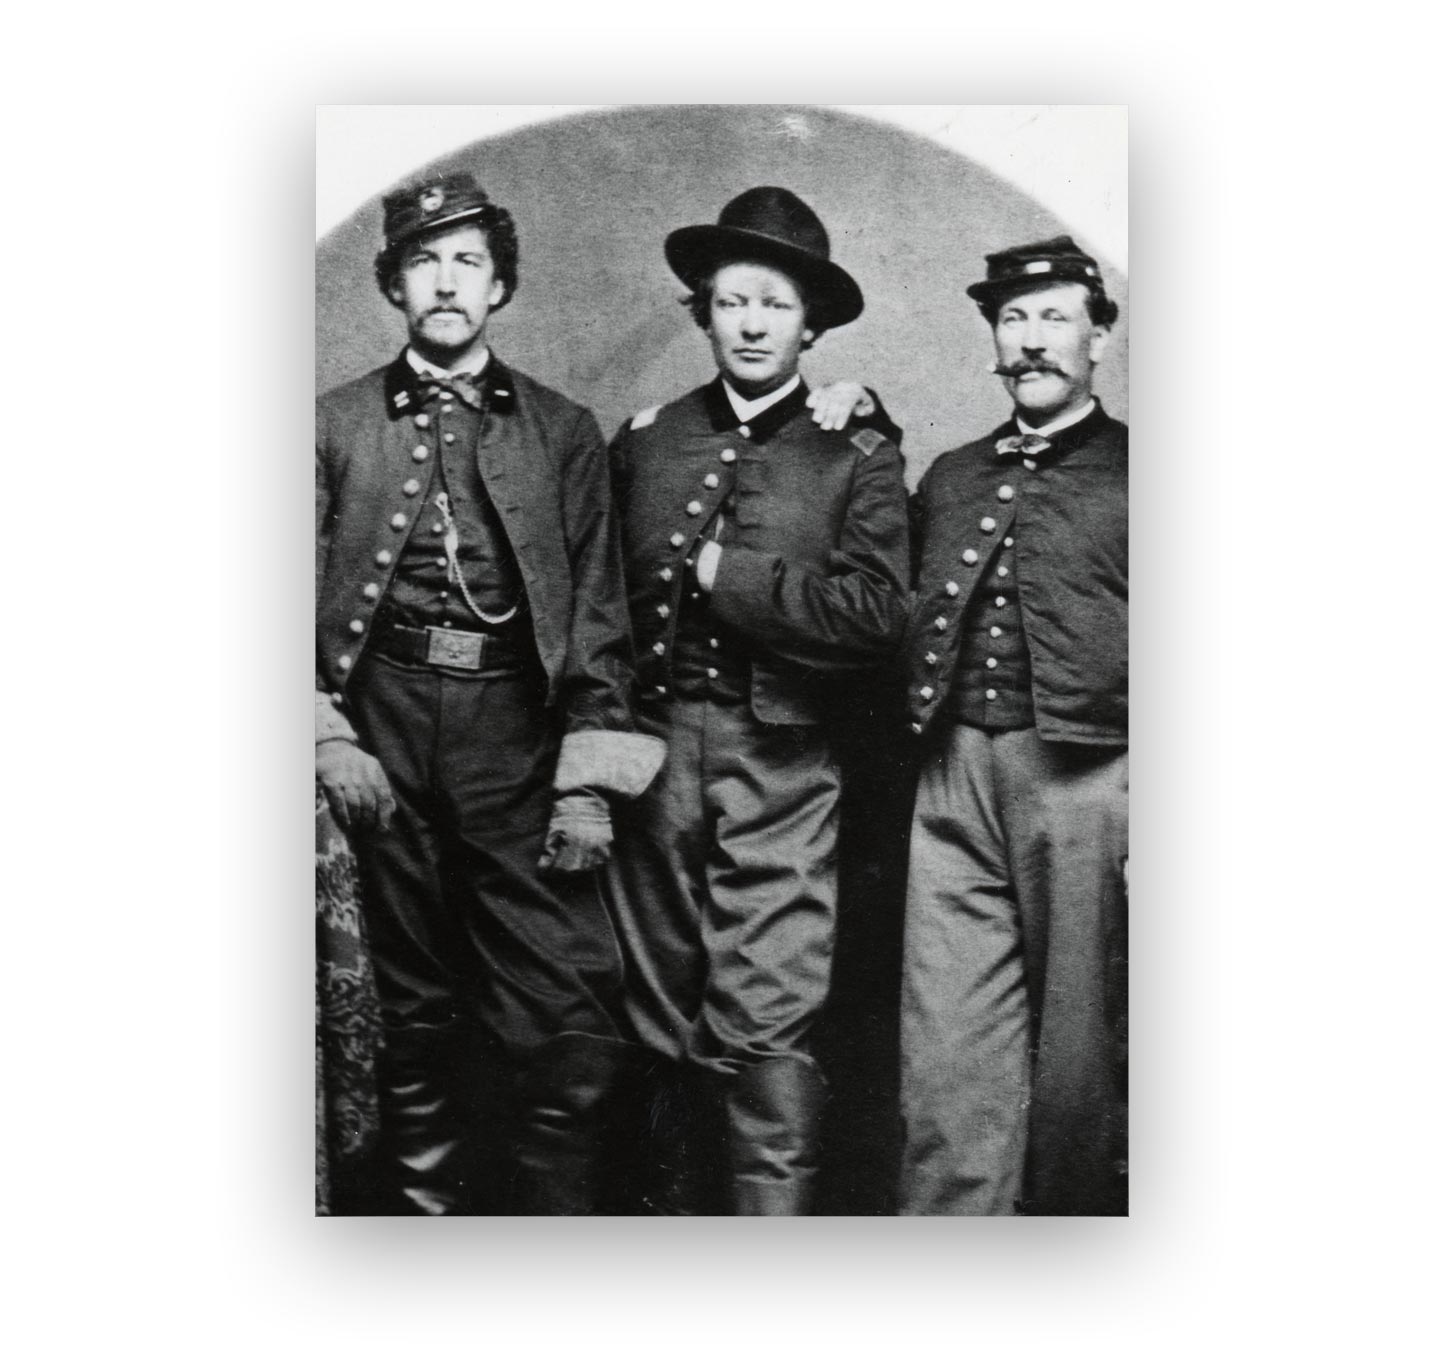 Capt. Pascall, Lt. Waples, & Capt. Townsend